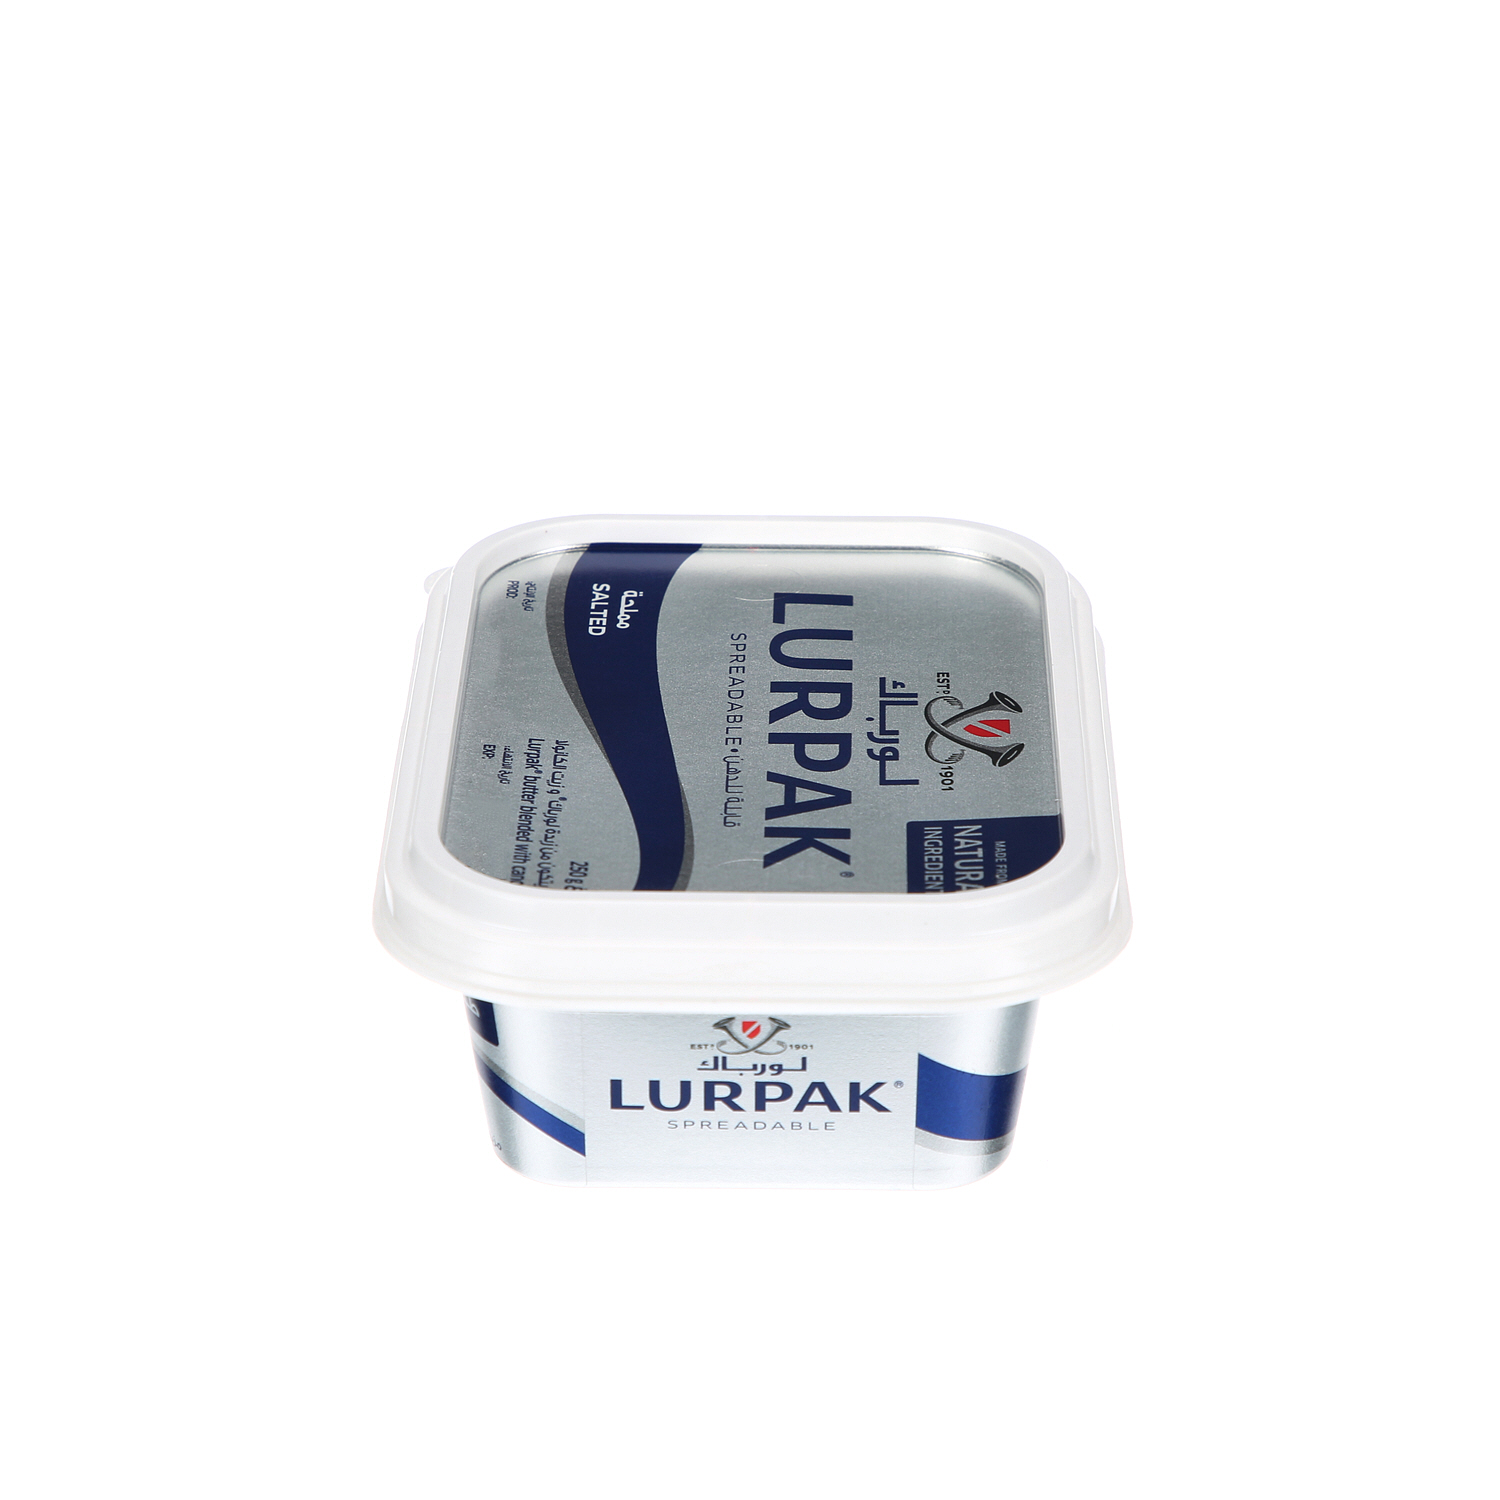 Lurpak Butter Spreadable Salted 250 g